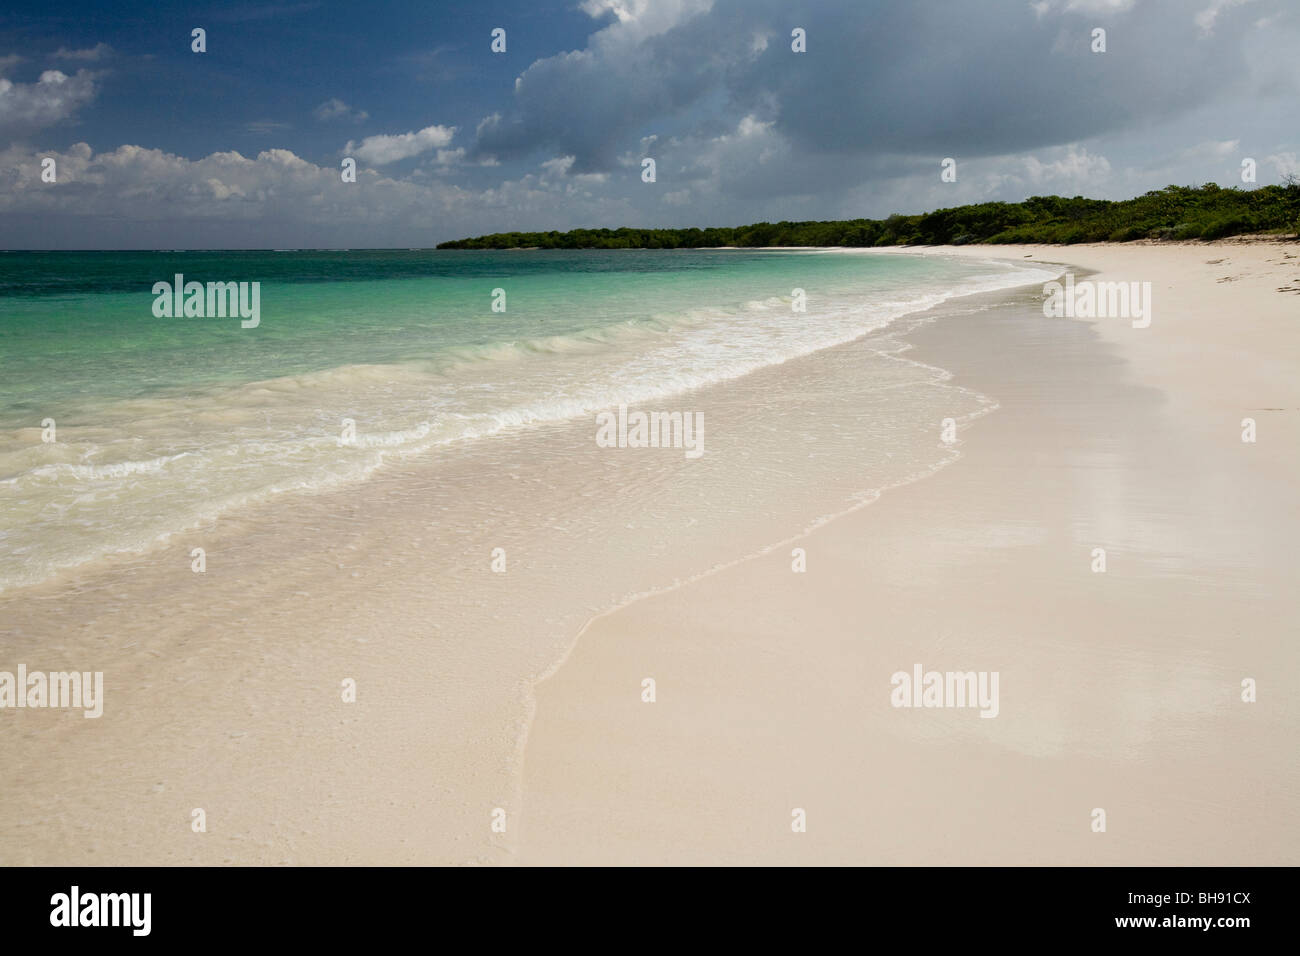 Beach of Santa Lucia, Santa Lucia, Caribbean Sea, Cuba Stock Photo